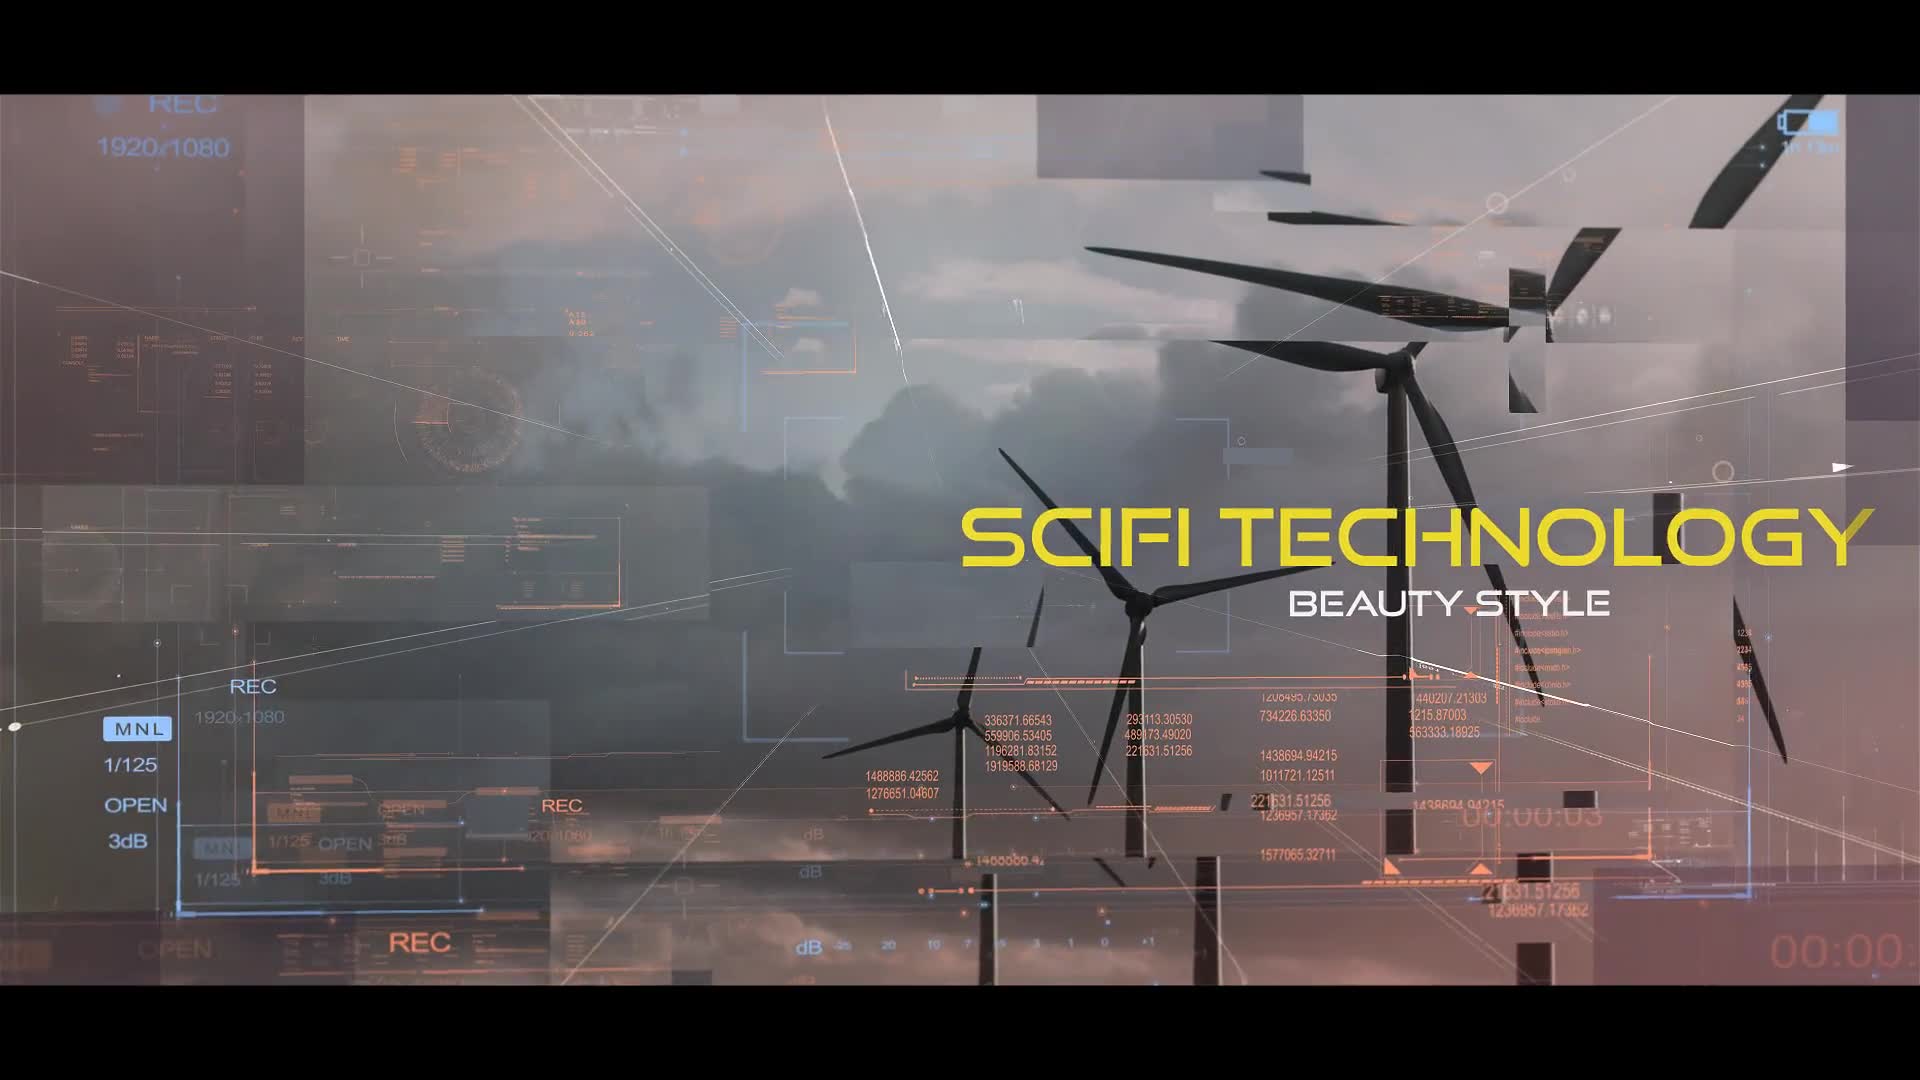 Science Techno Parallax Slideshow - Download Videohive 20596470